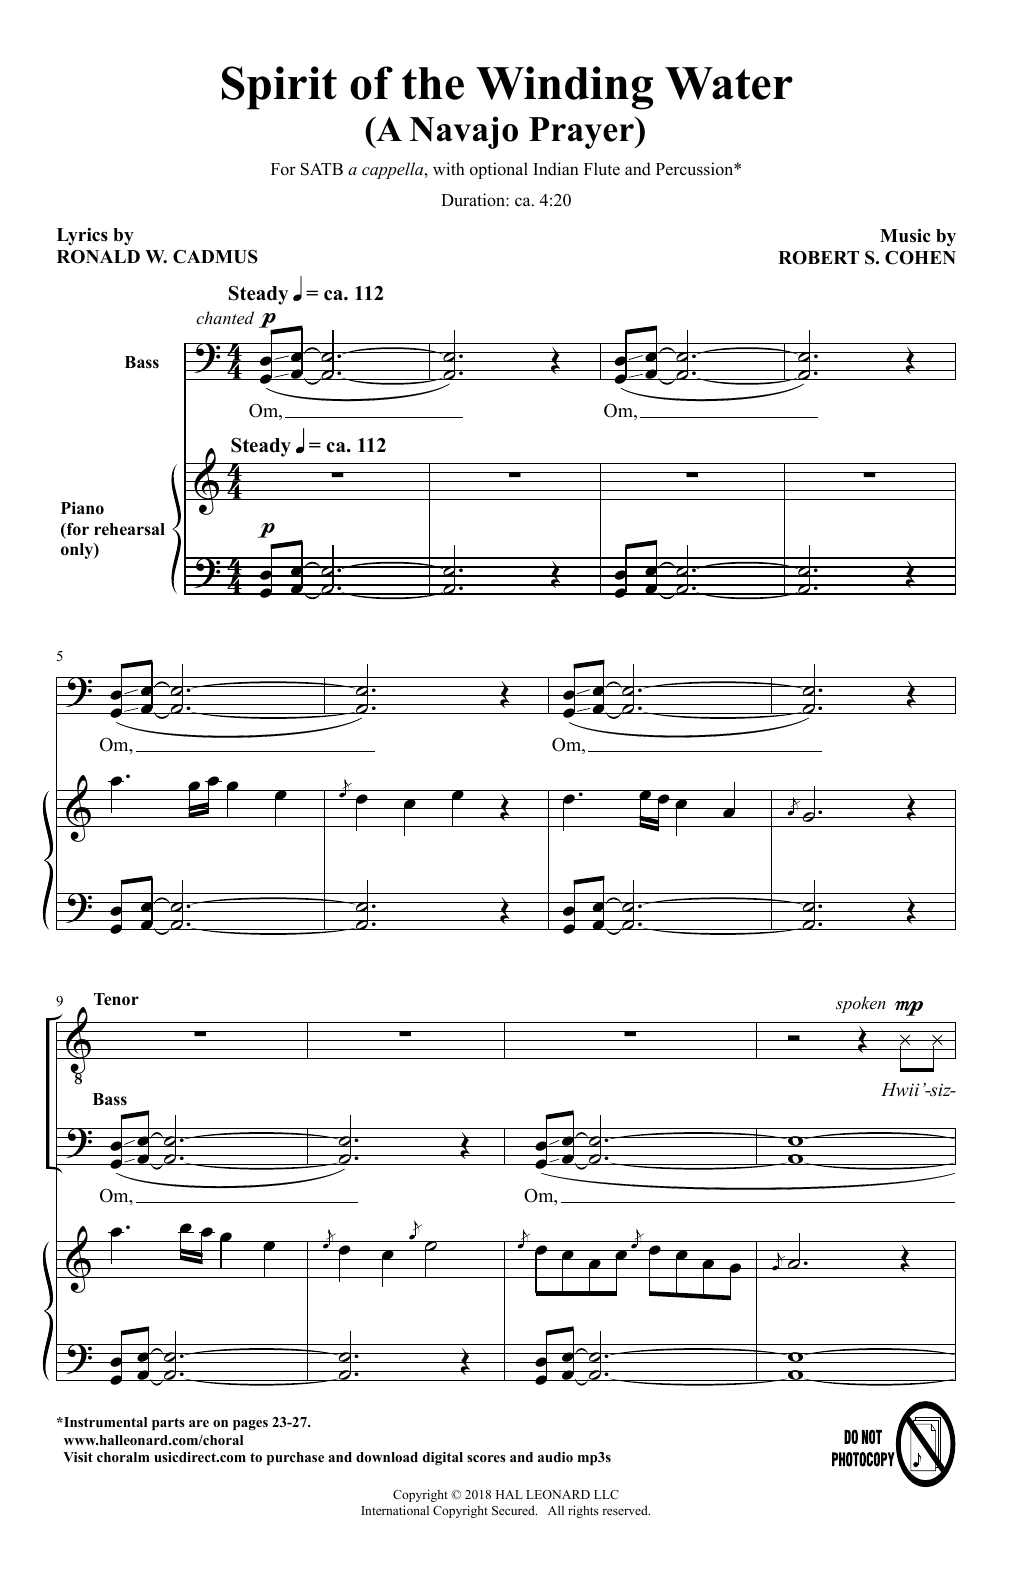 Robert Cohen & Ronald W. Cadmus Spirit Of The Winding Water (A Navajo Prayer) Sheet Music Notes & Chords for SATB Choir - Download or Print PDF